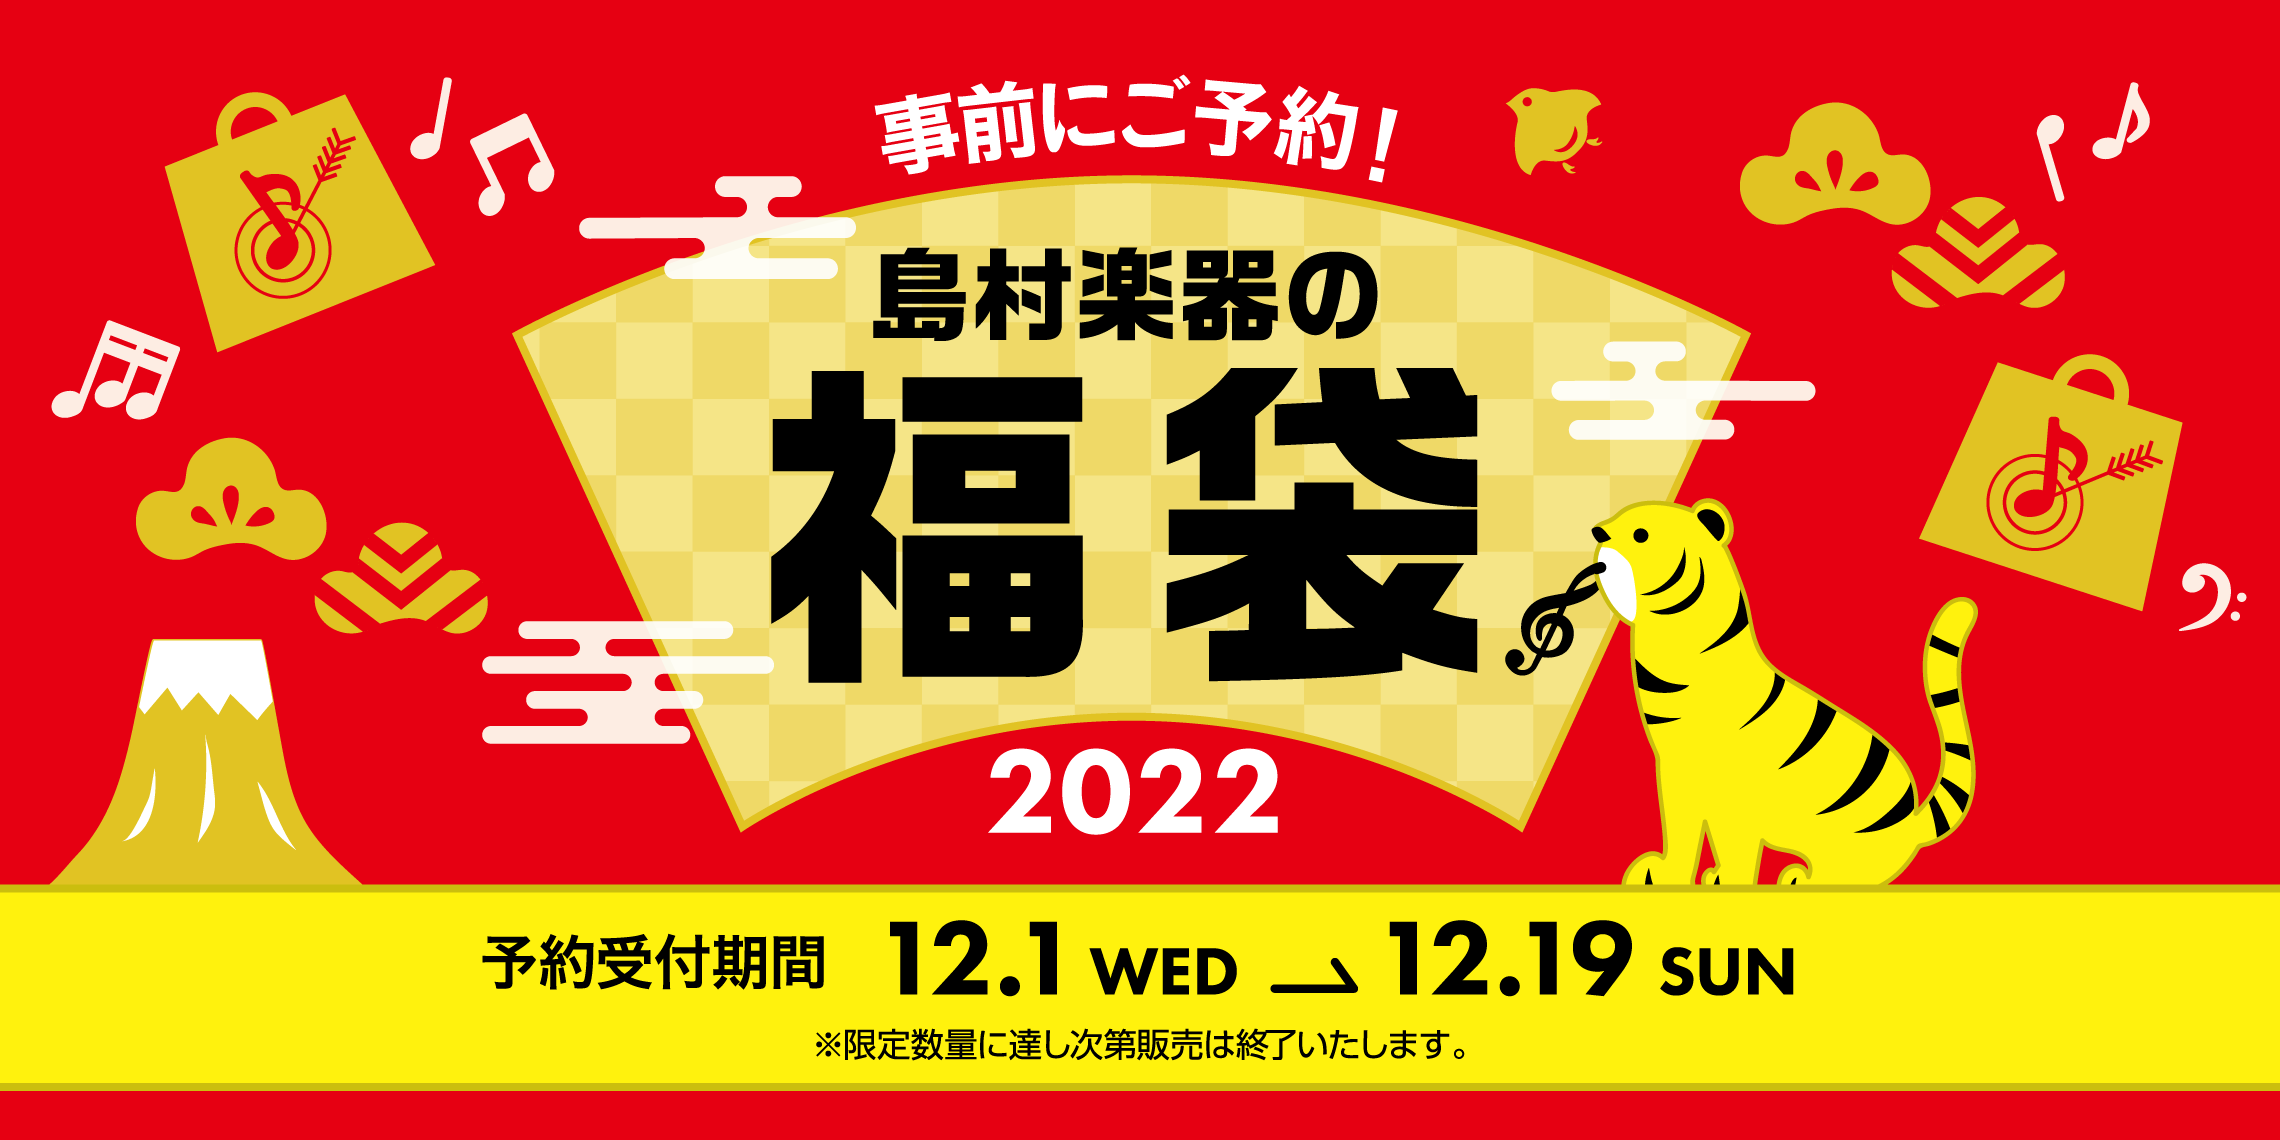 【HAPPY NEW YEAR 2022】年末年始セール、福袋のご案内